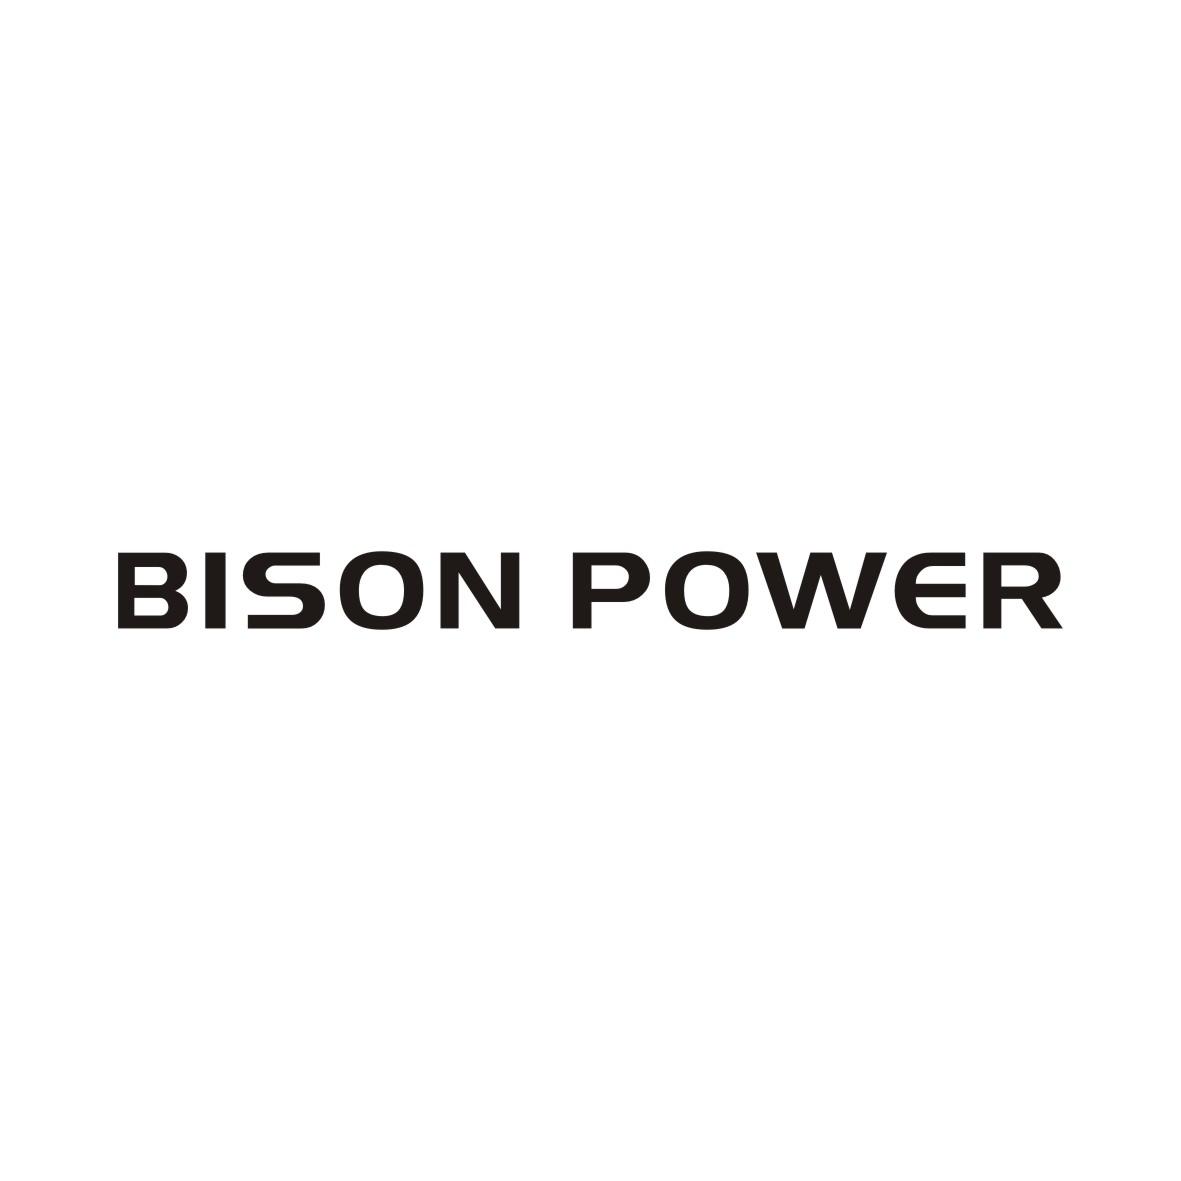 22类-网绳篷袋BISON POWER商标转让